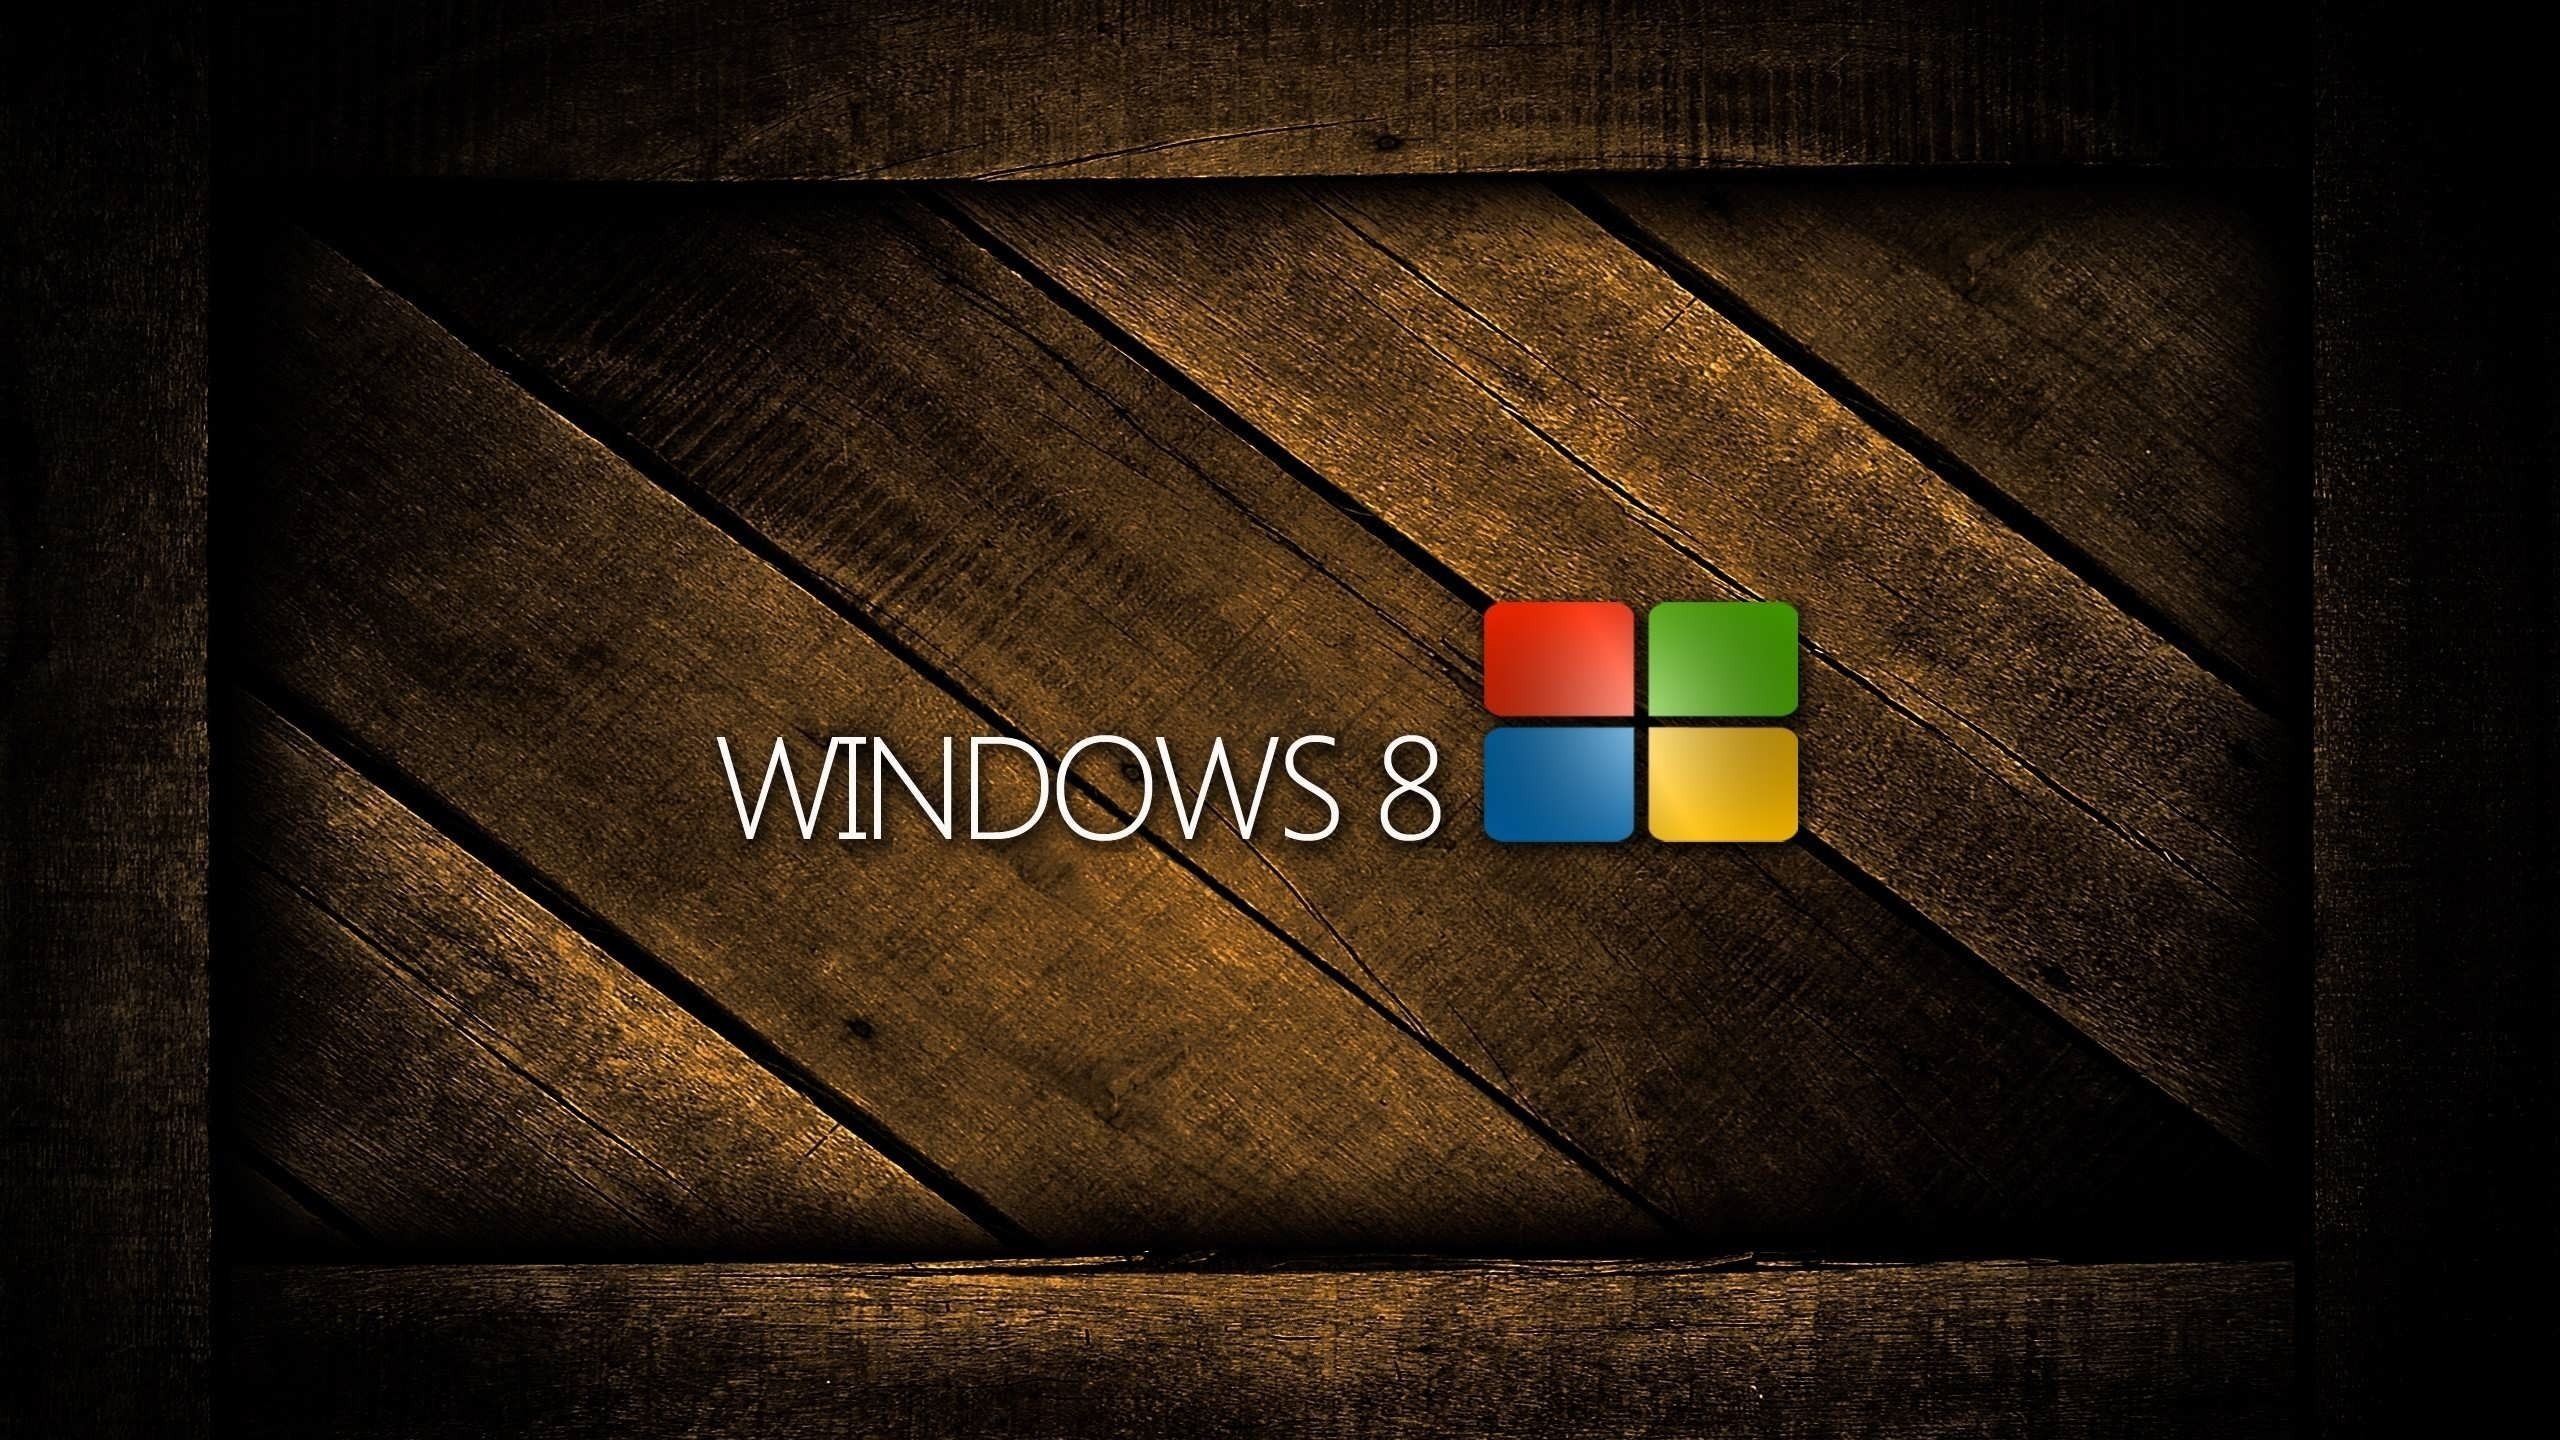 Windows 8 Wood for 2560x1440 HDTV resolution